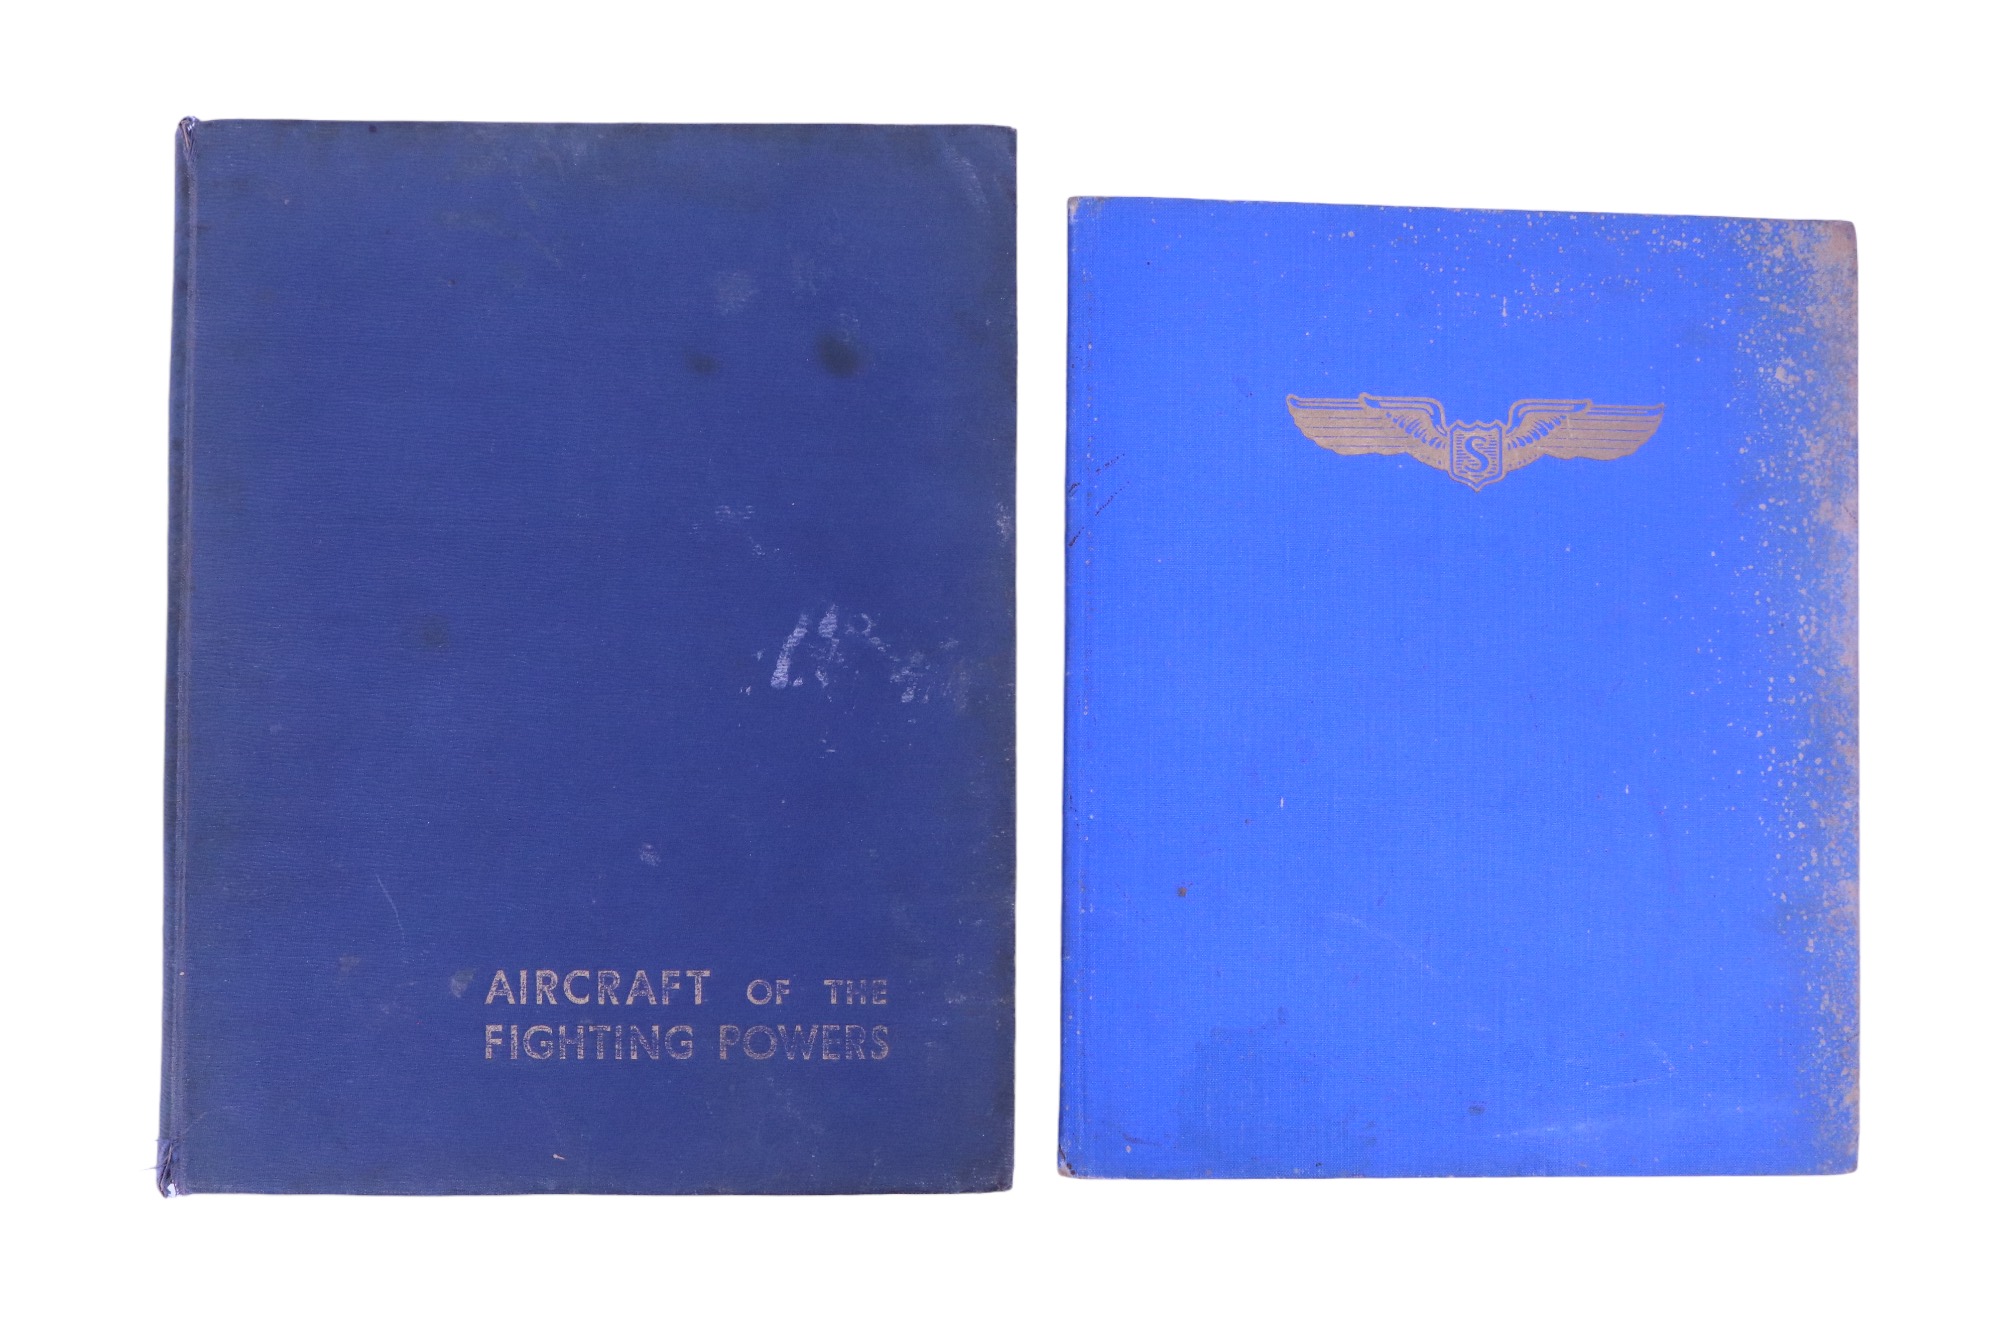 [ Military aircraft / aviation / RAF ] Second World War RAF aircraft recognition handbooks, a - Image 2 of 2